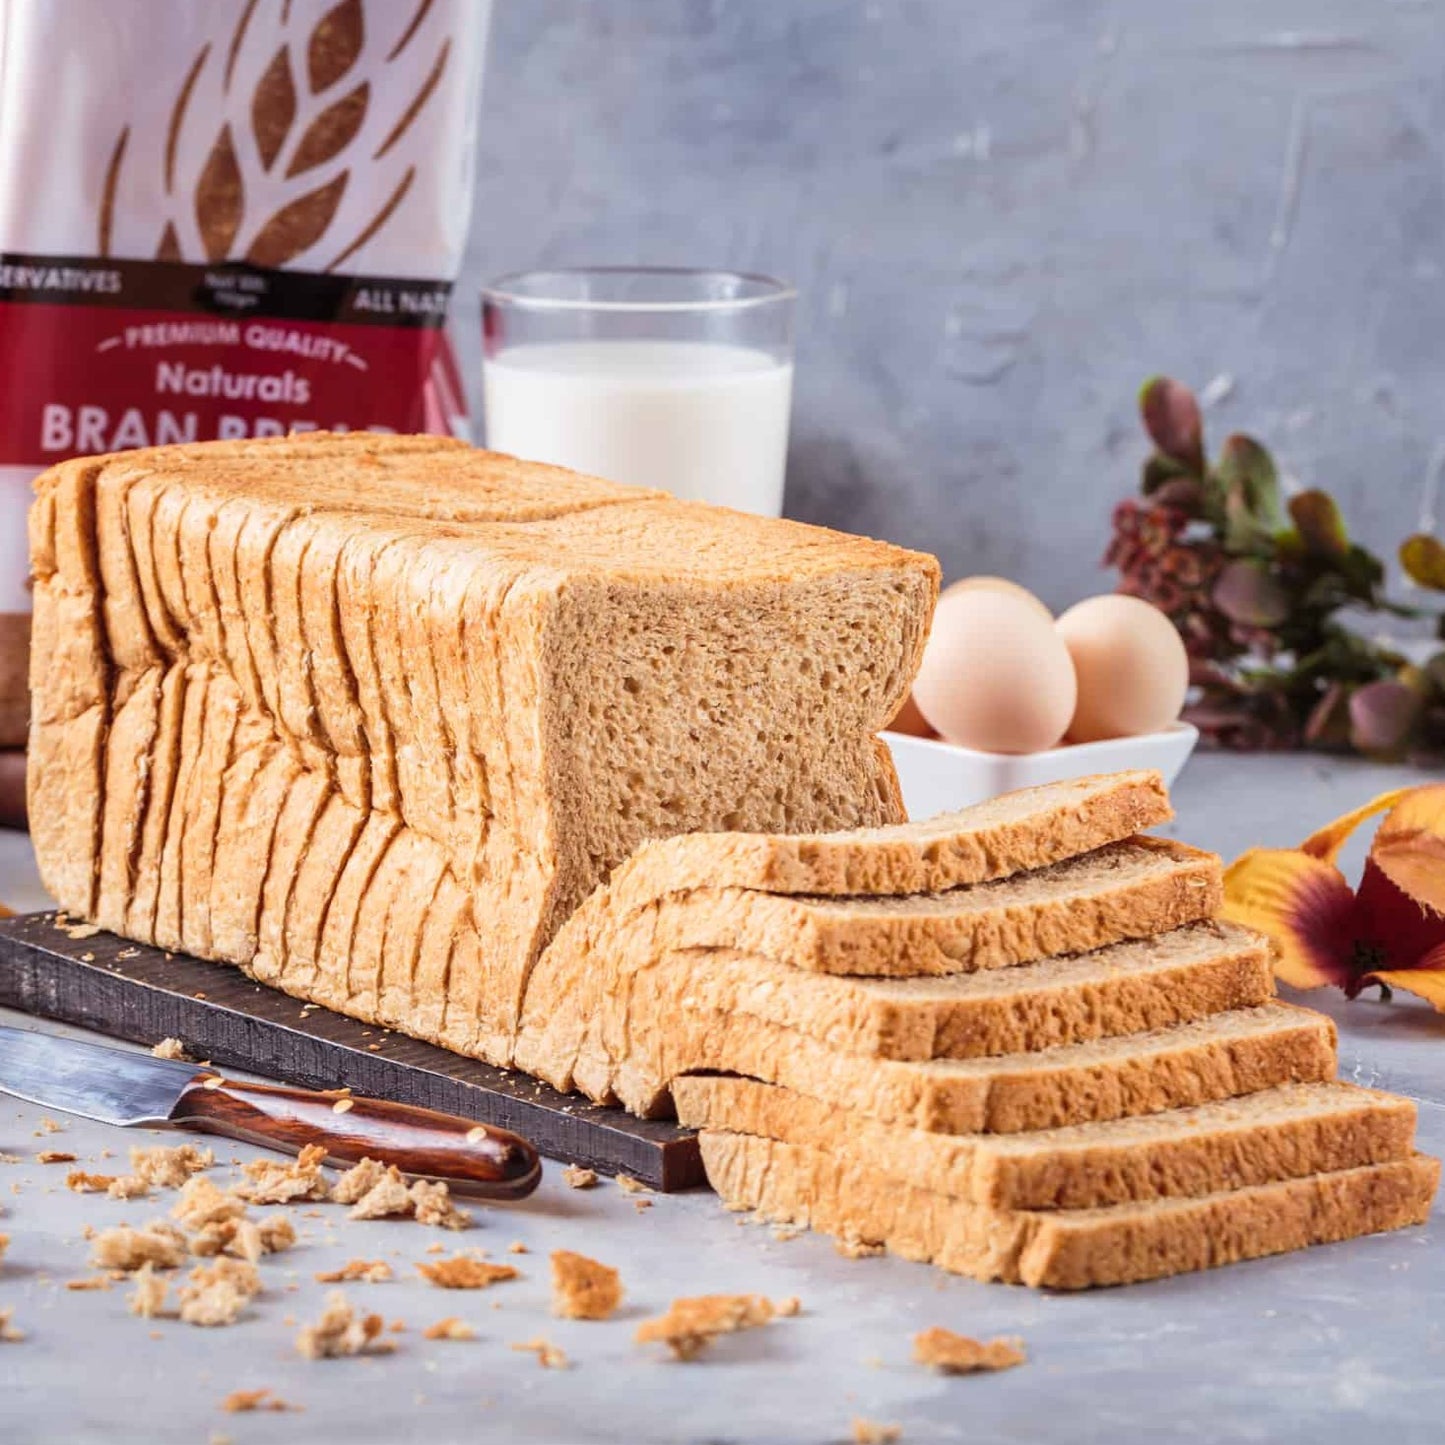 Bran Bread (large)